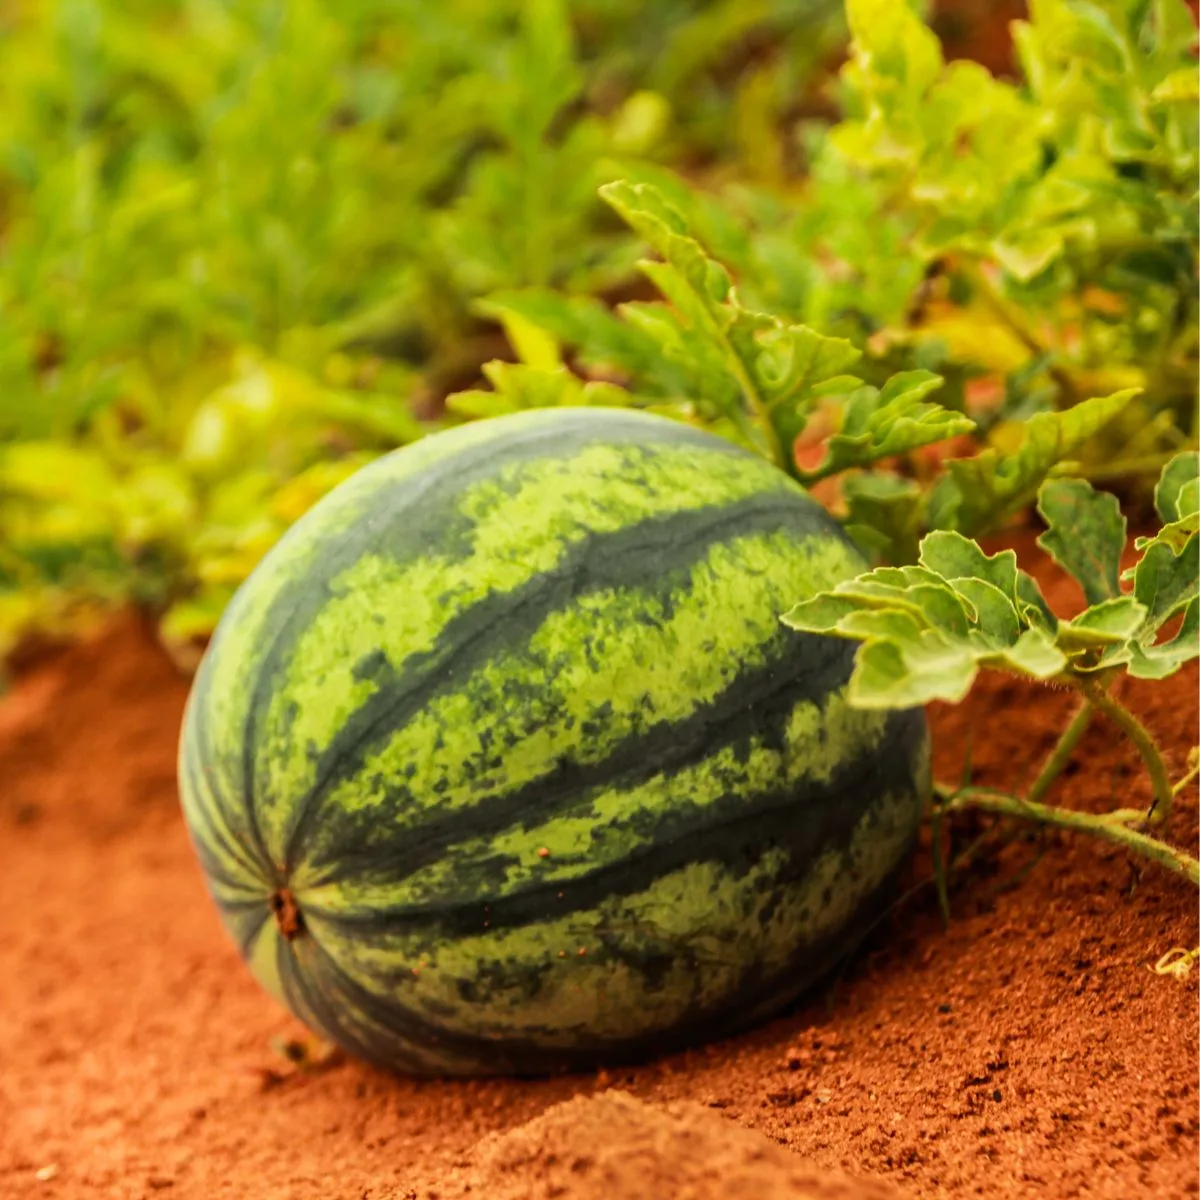 A beautiful striped green melon in the garden.